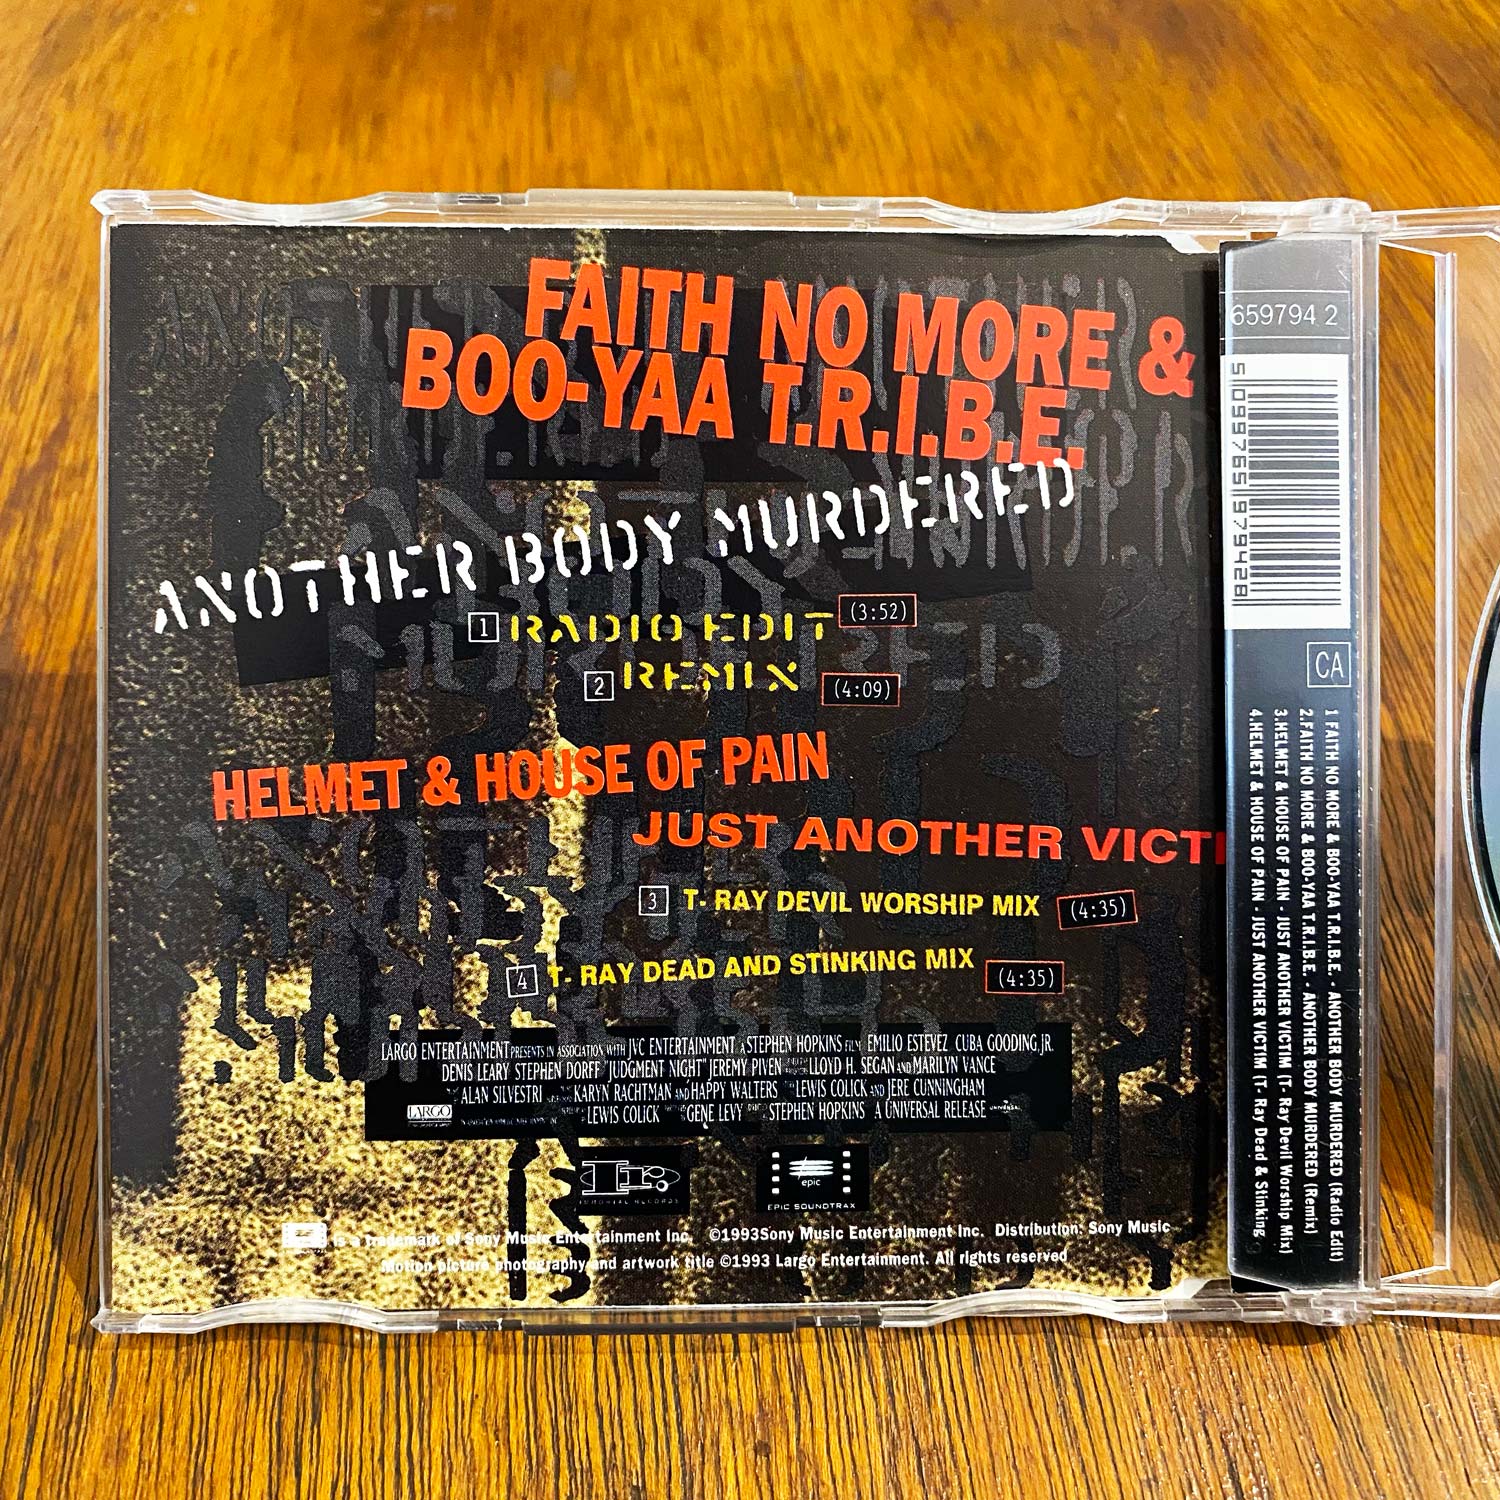 Faith No More & Boo-Yaa T.R.I.B.E. - Another Body Mur...